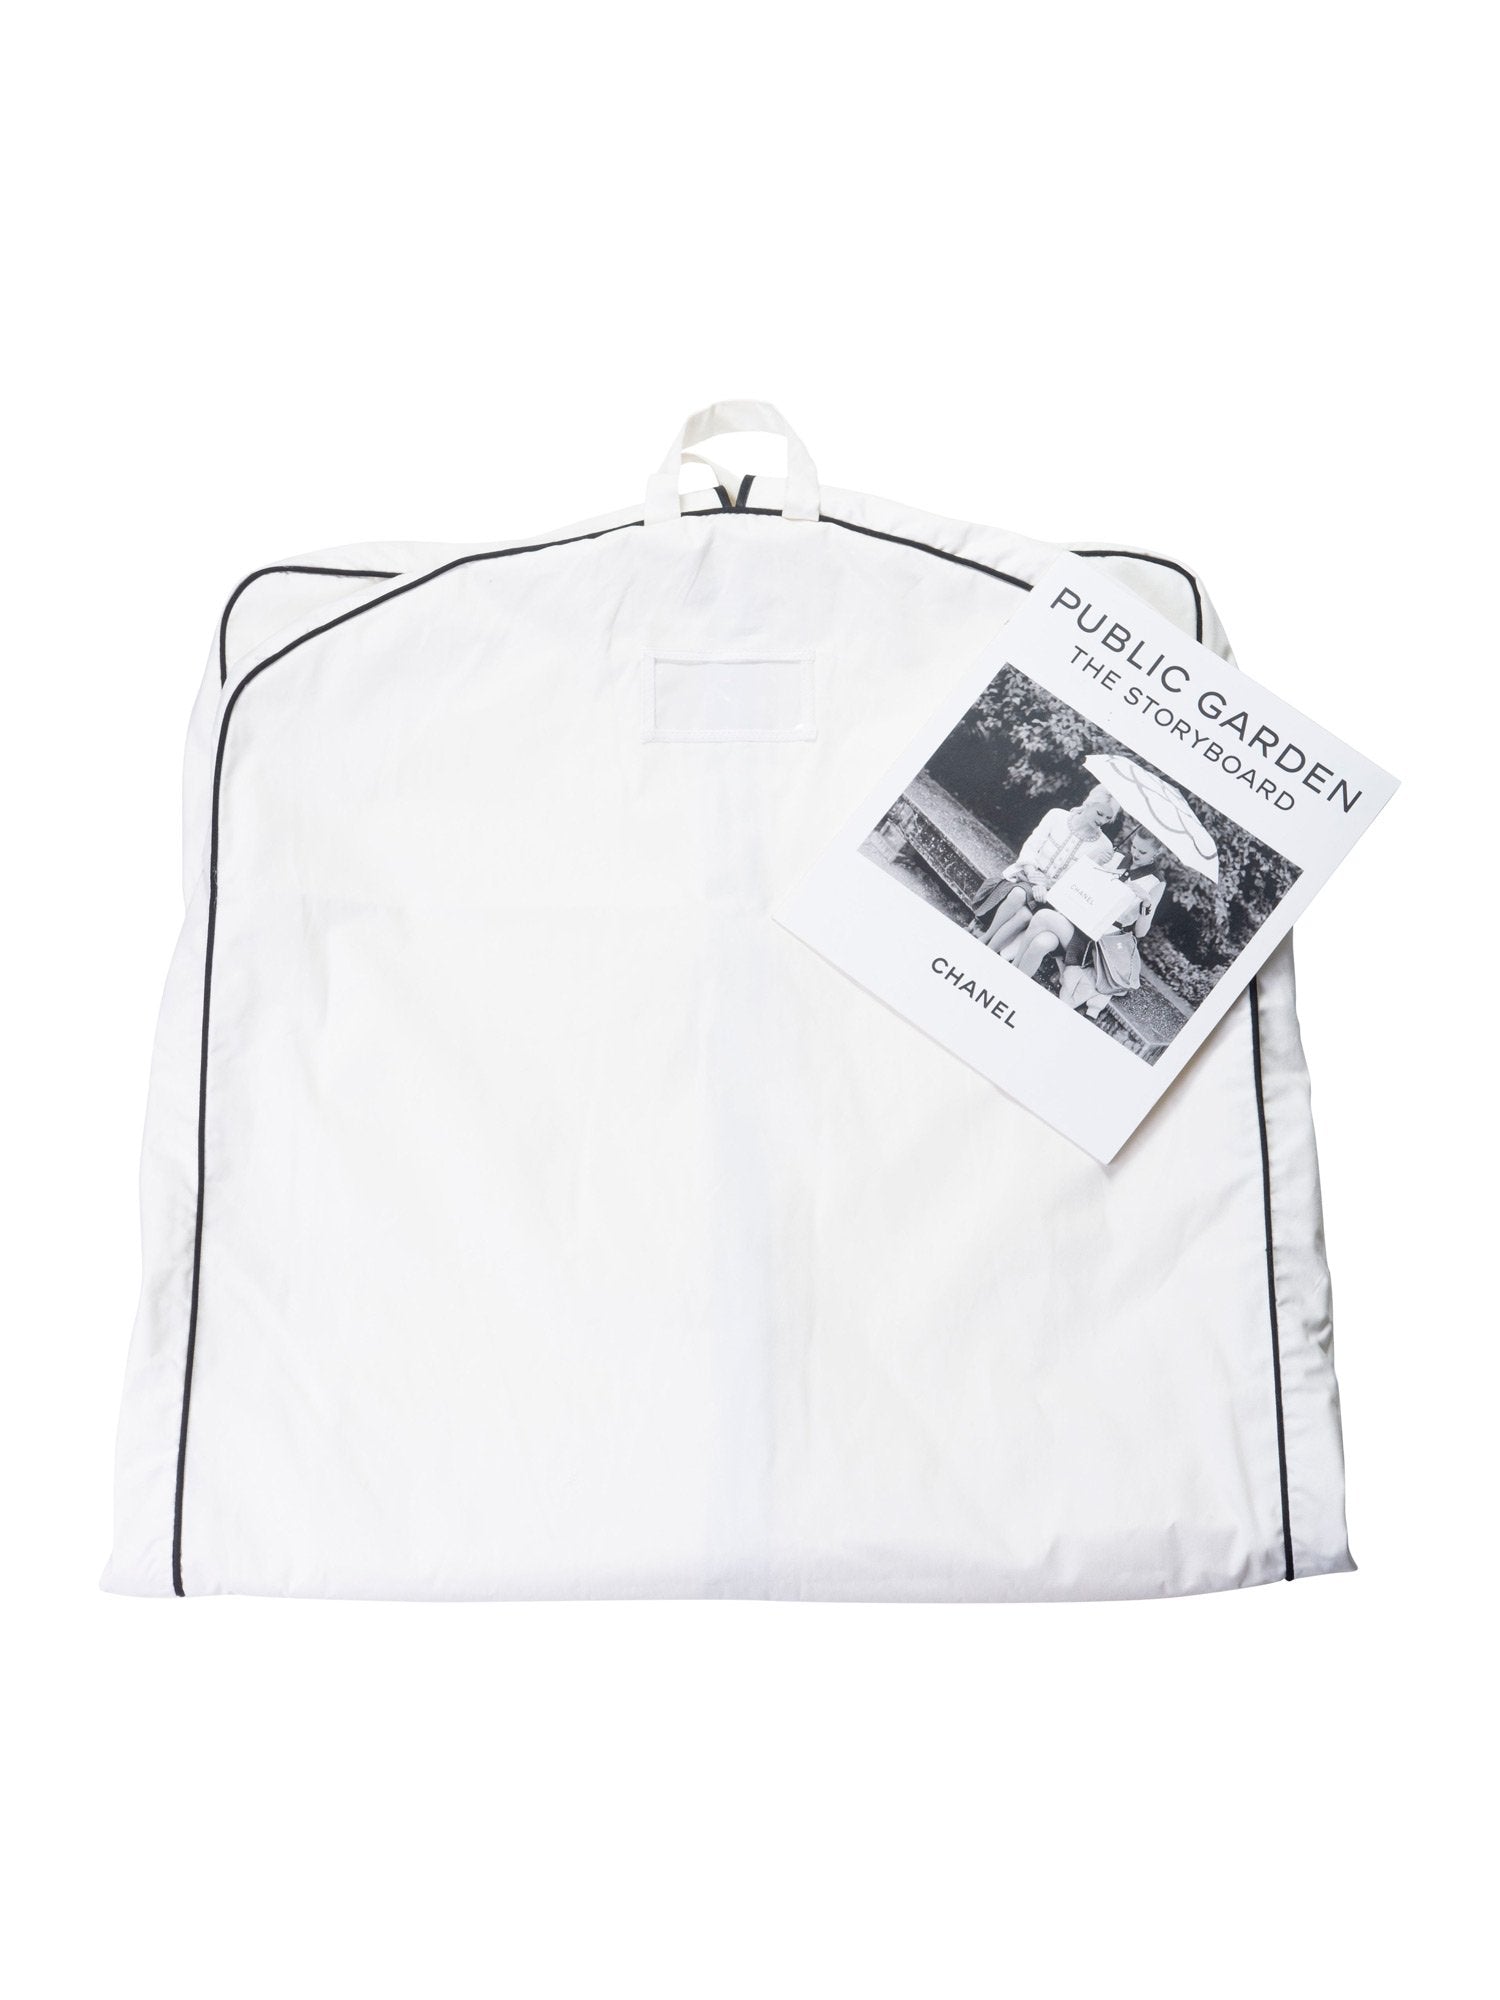 CHANEL Logo Canvas Garment Bag White Black-designer resale